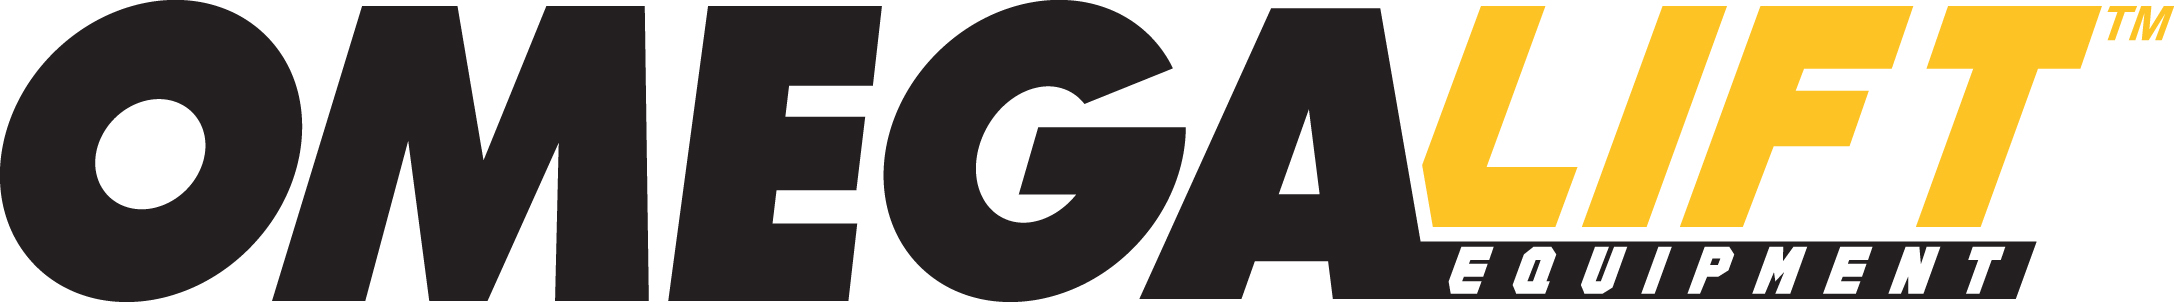 OMEGA logo